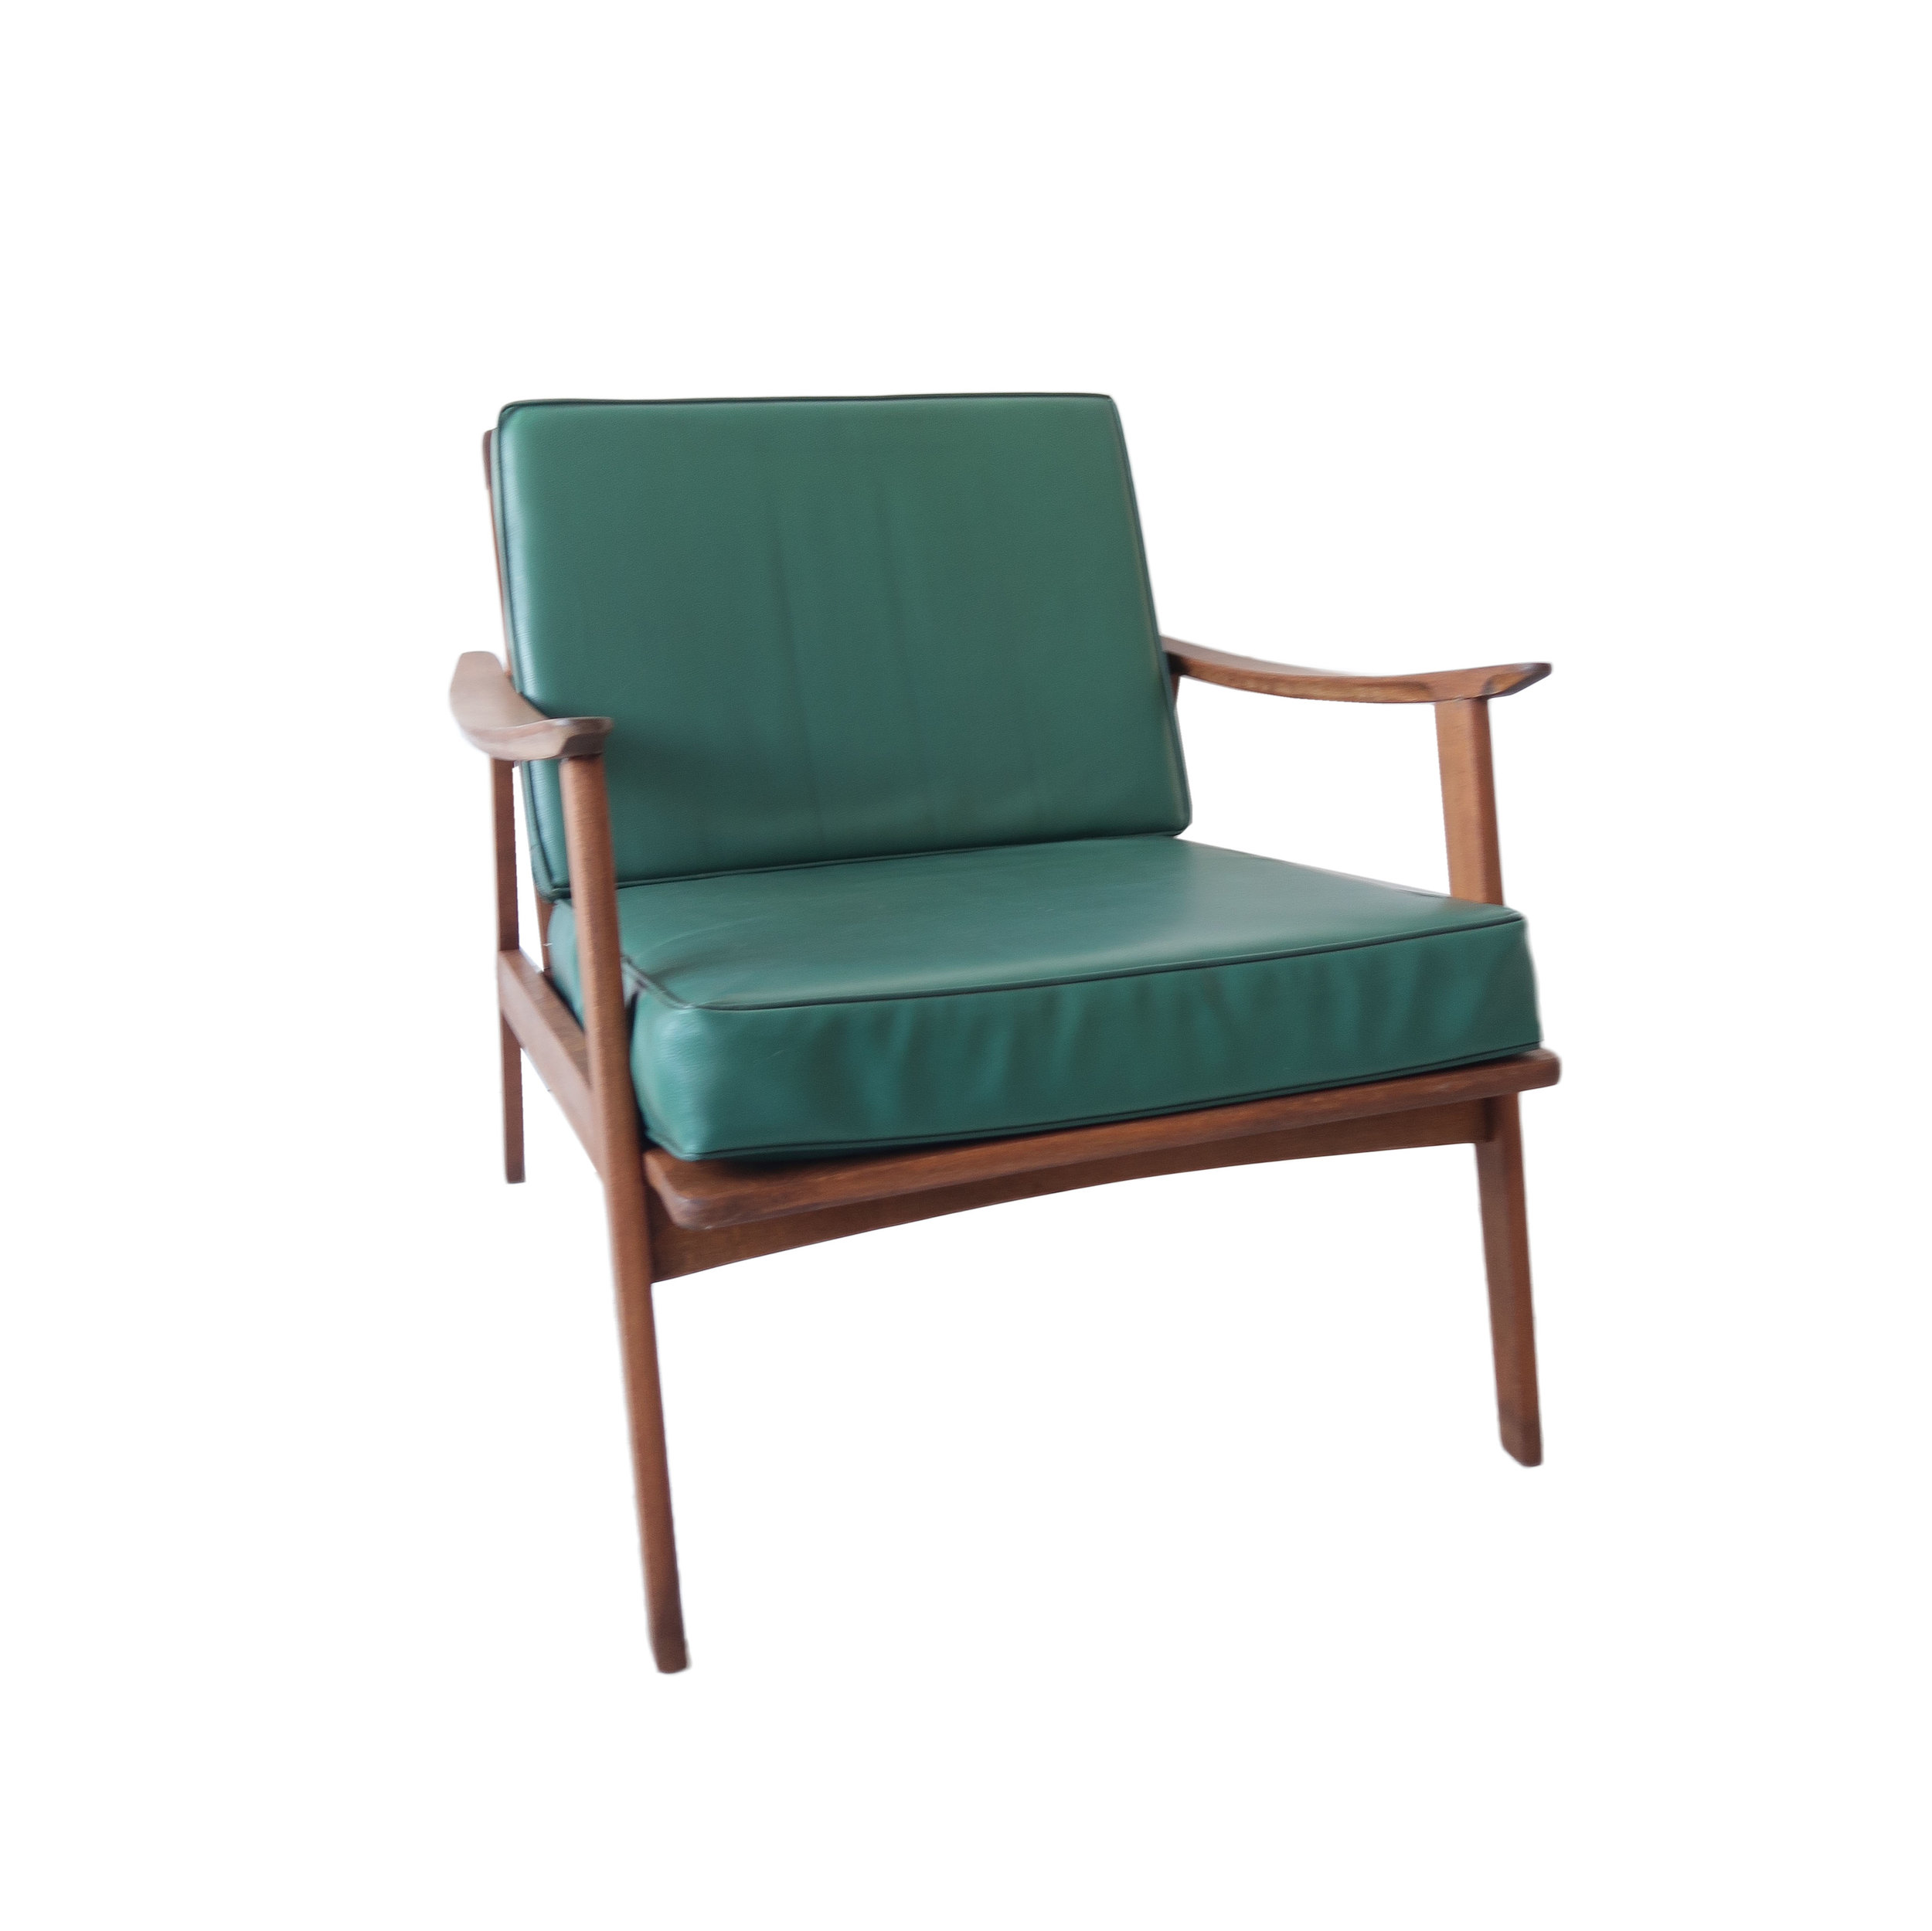 vintage green mid century modern lounge chair.jpg